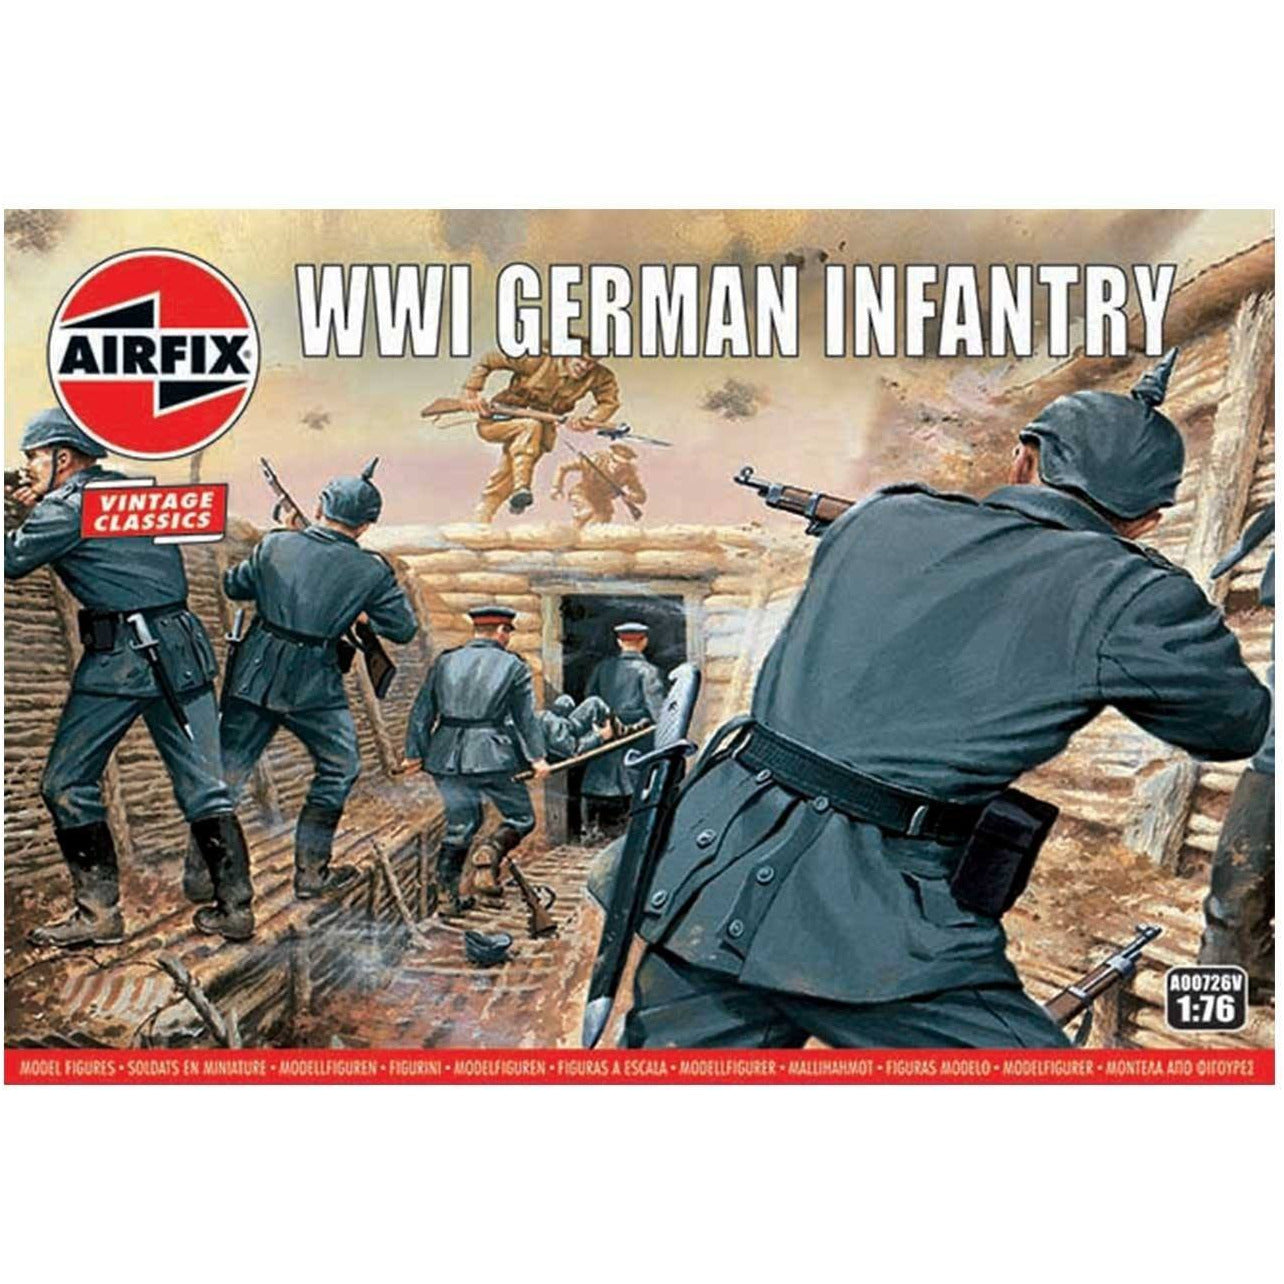 German Infantry WWI 1/76 by Airfix